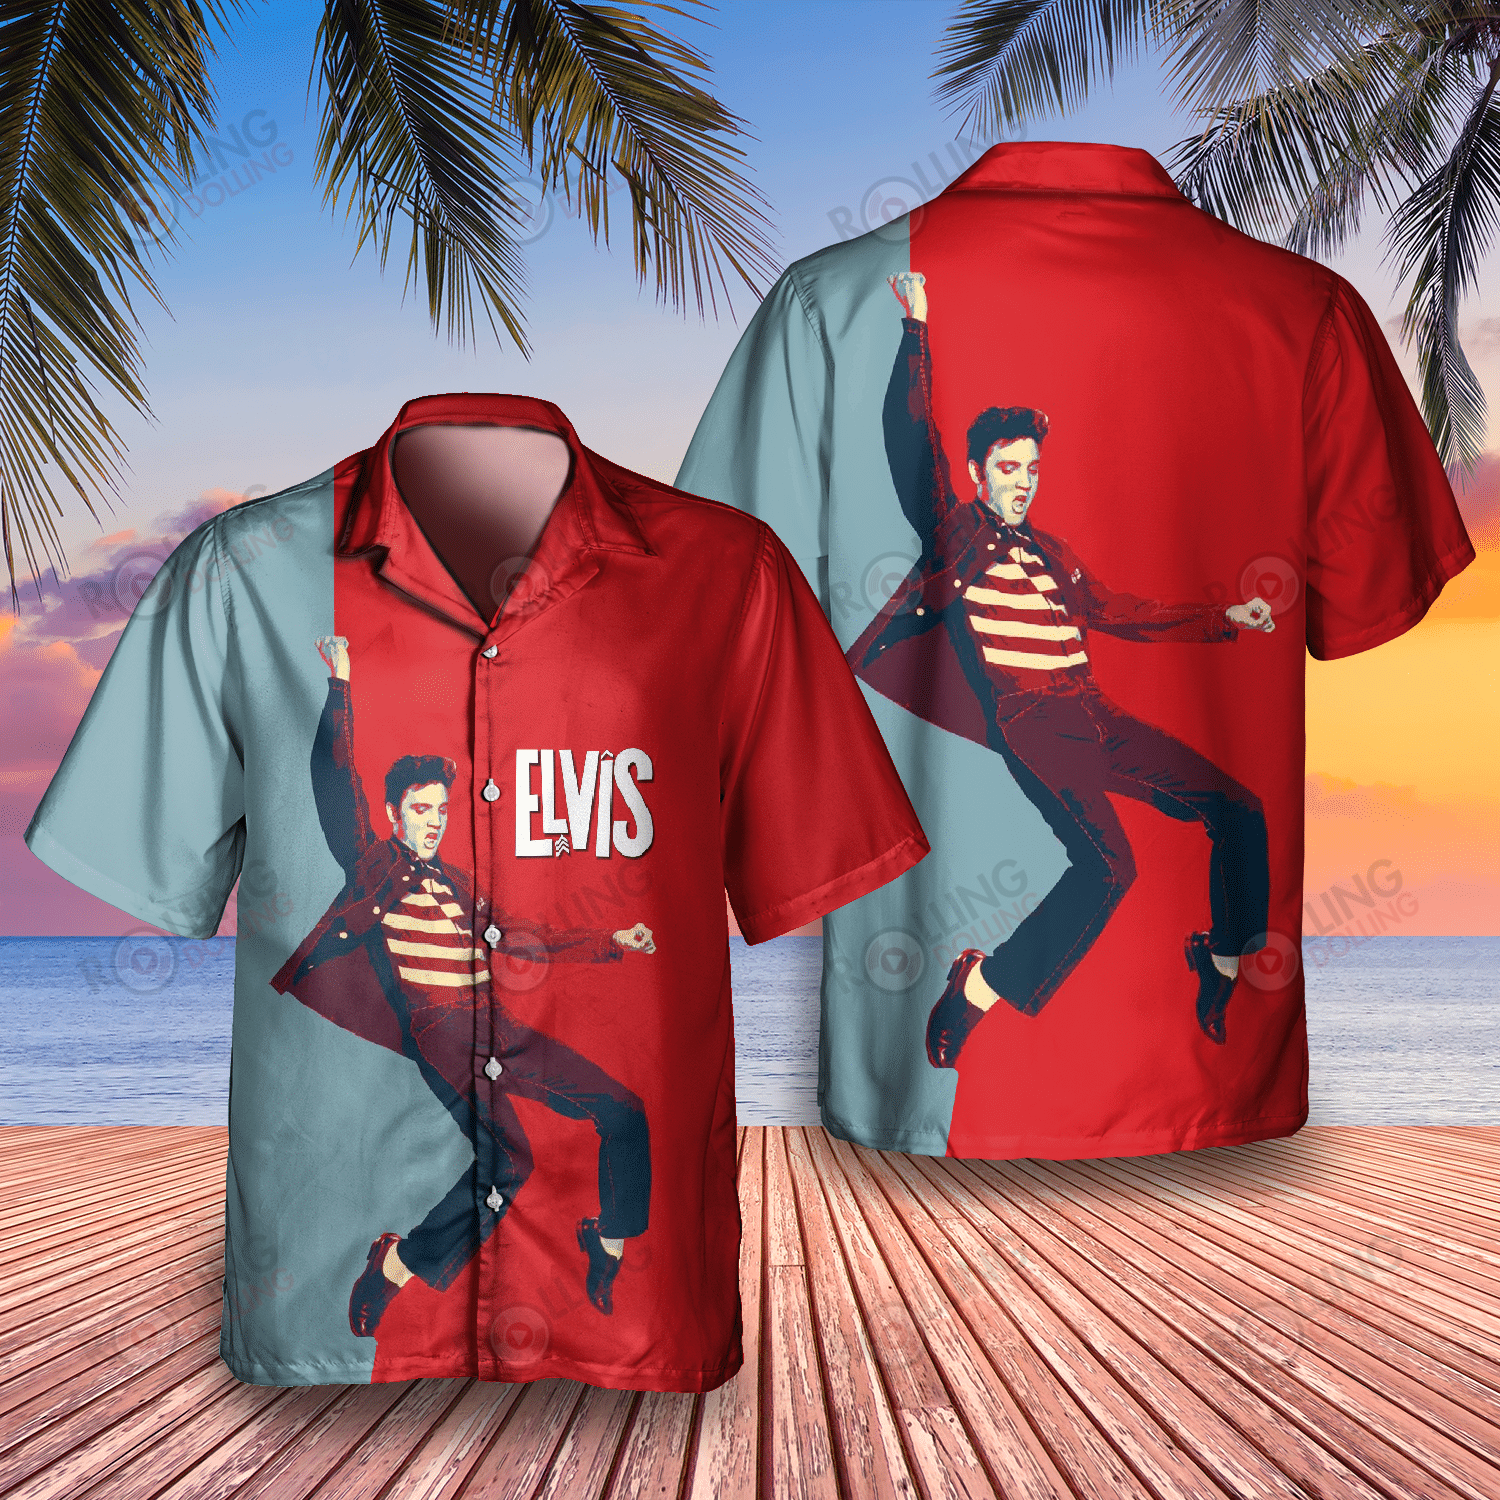 HOT Elvis Presley Elvis Presley 2 Album Tropical Shirt2